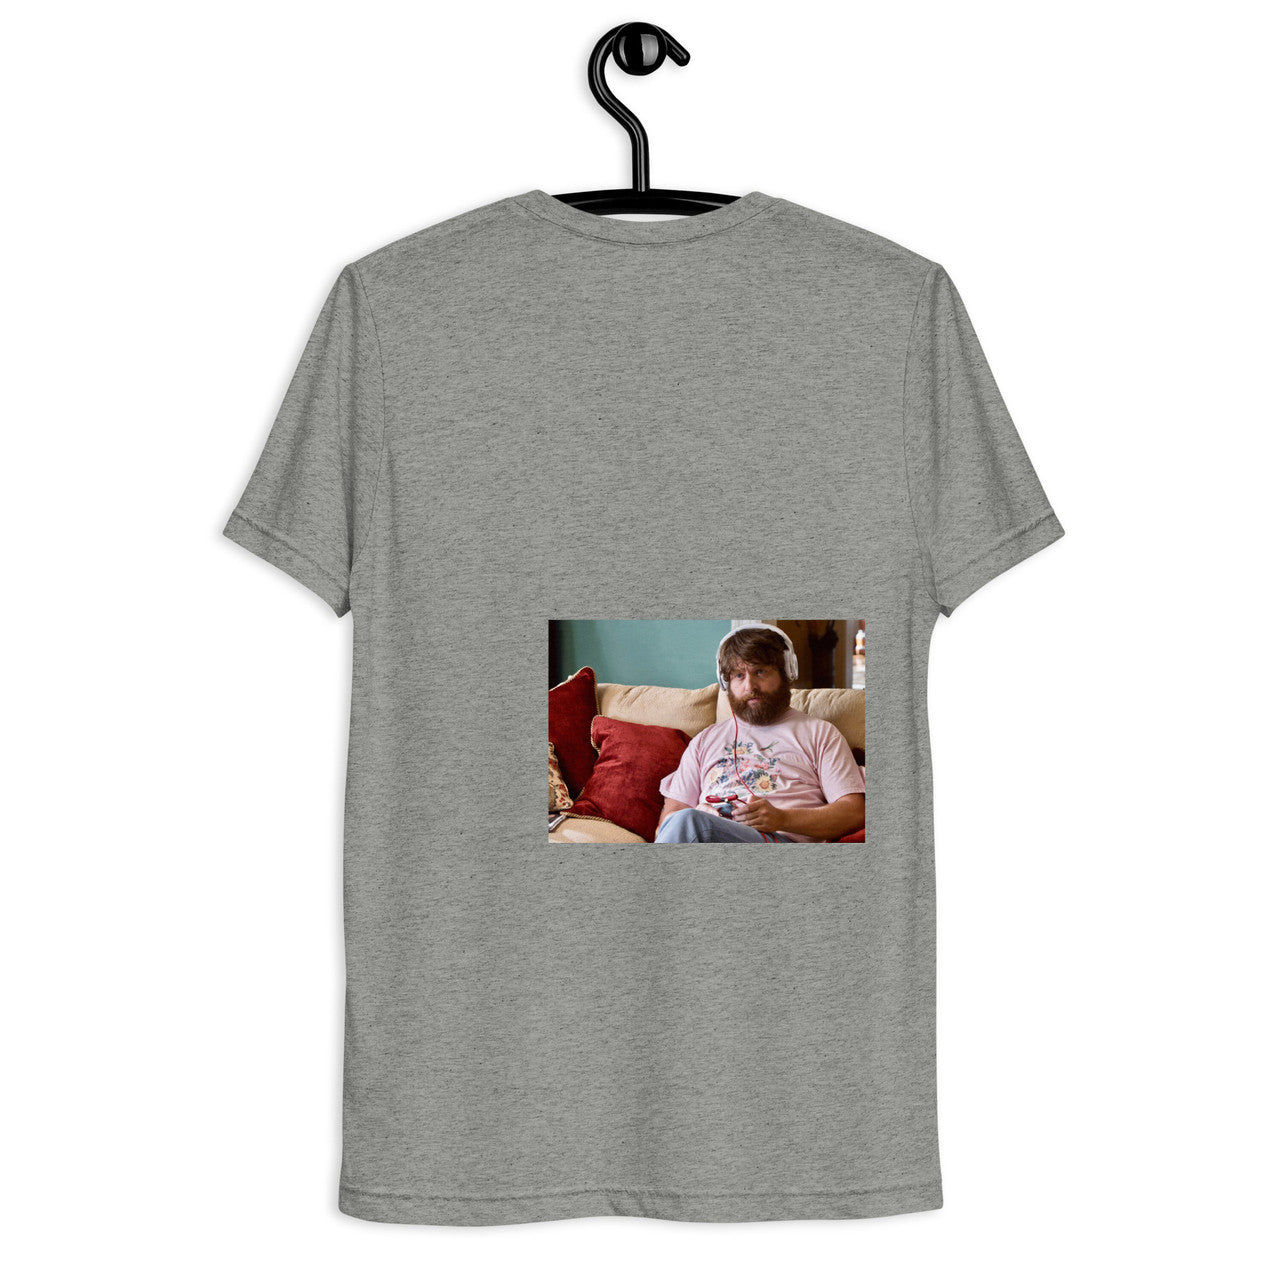 Alan Headphones KiSS Short sleeve Embroidered t-shirt - The Hangover Zach Galifianakis